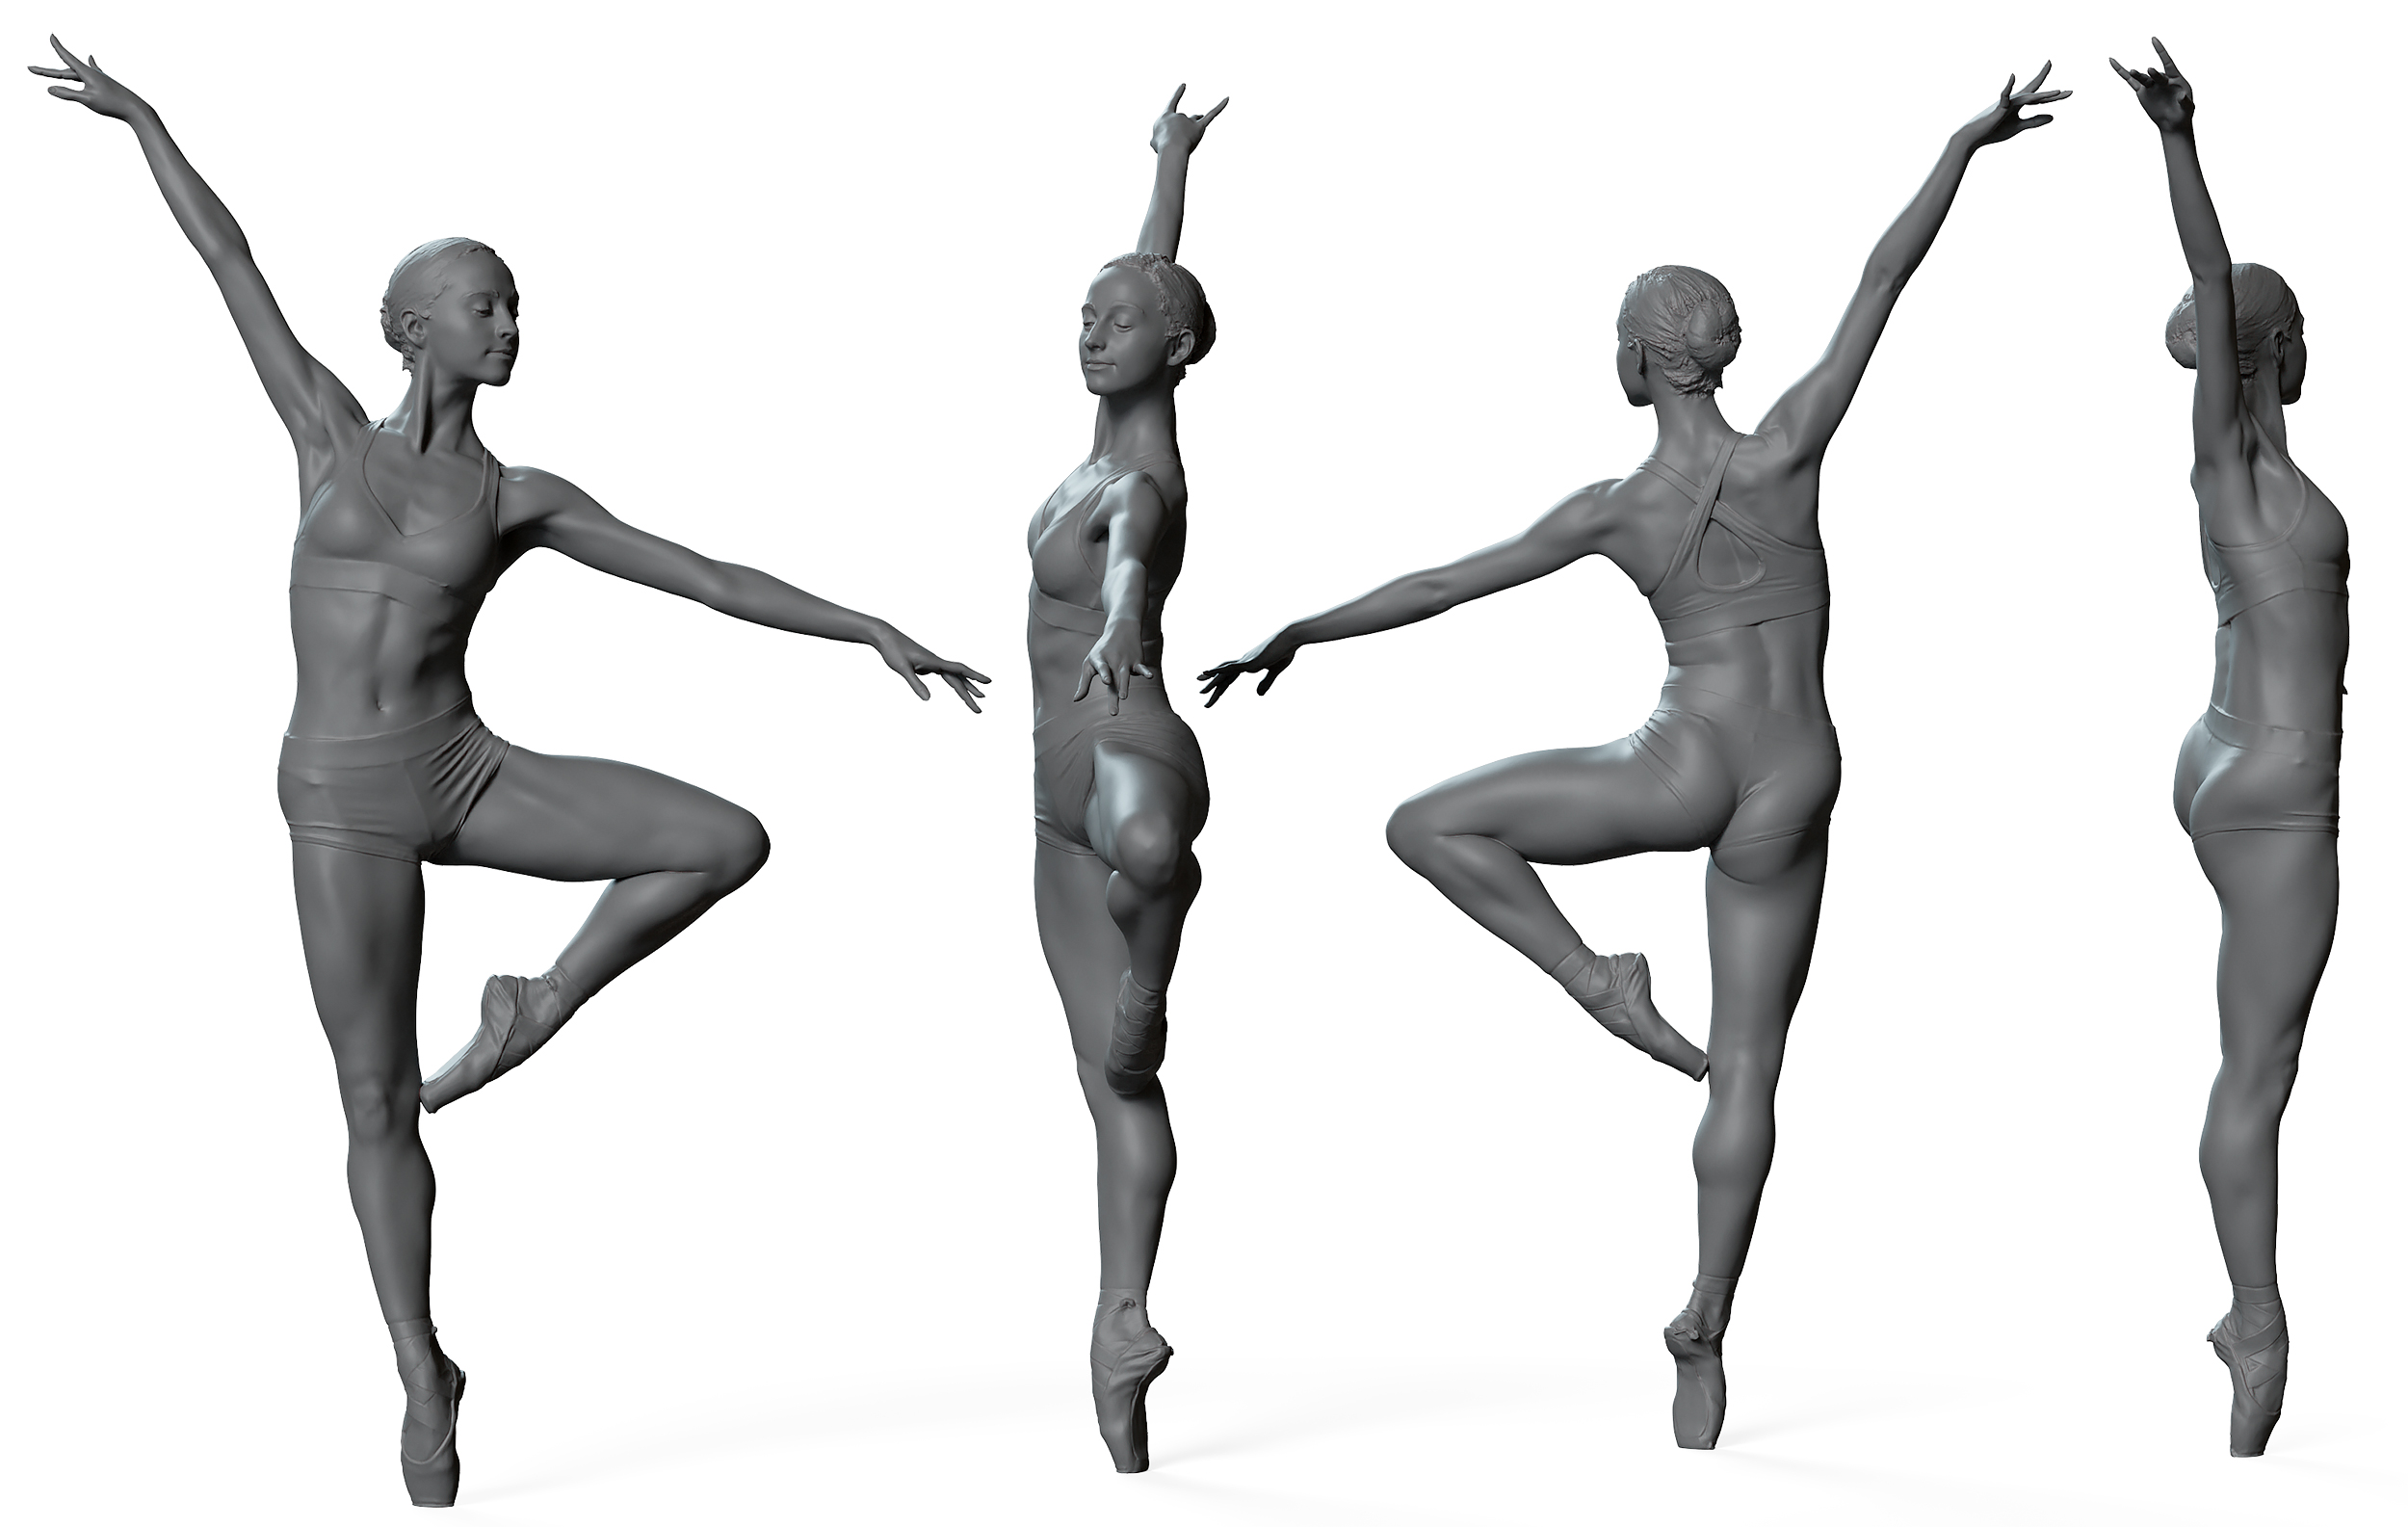 kpop dance poses by KuyoBuyo on DeviantArt | Dancing drawings, Dance poses, Dancing  sketch